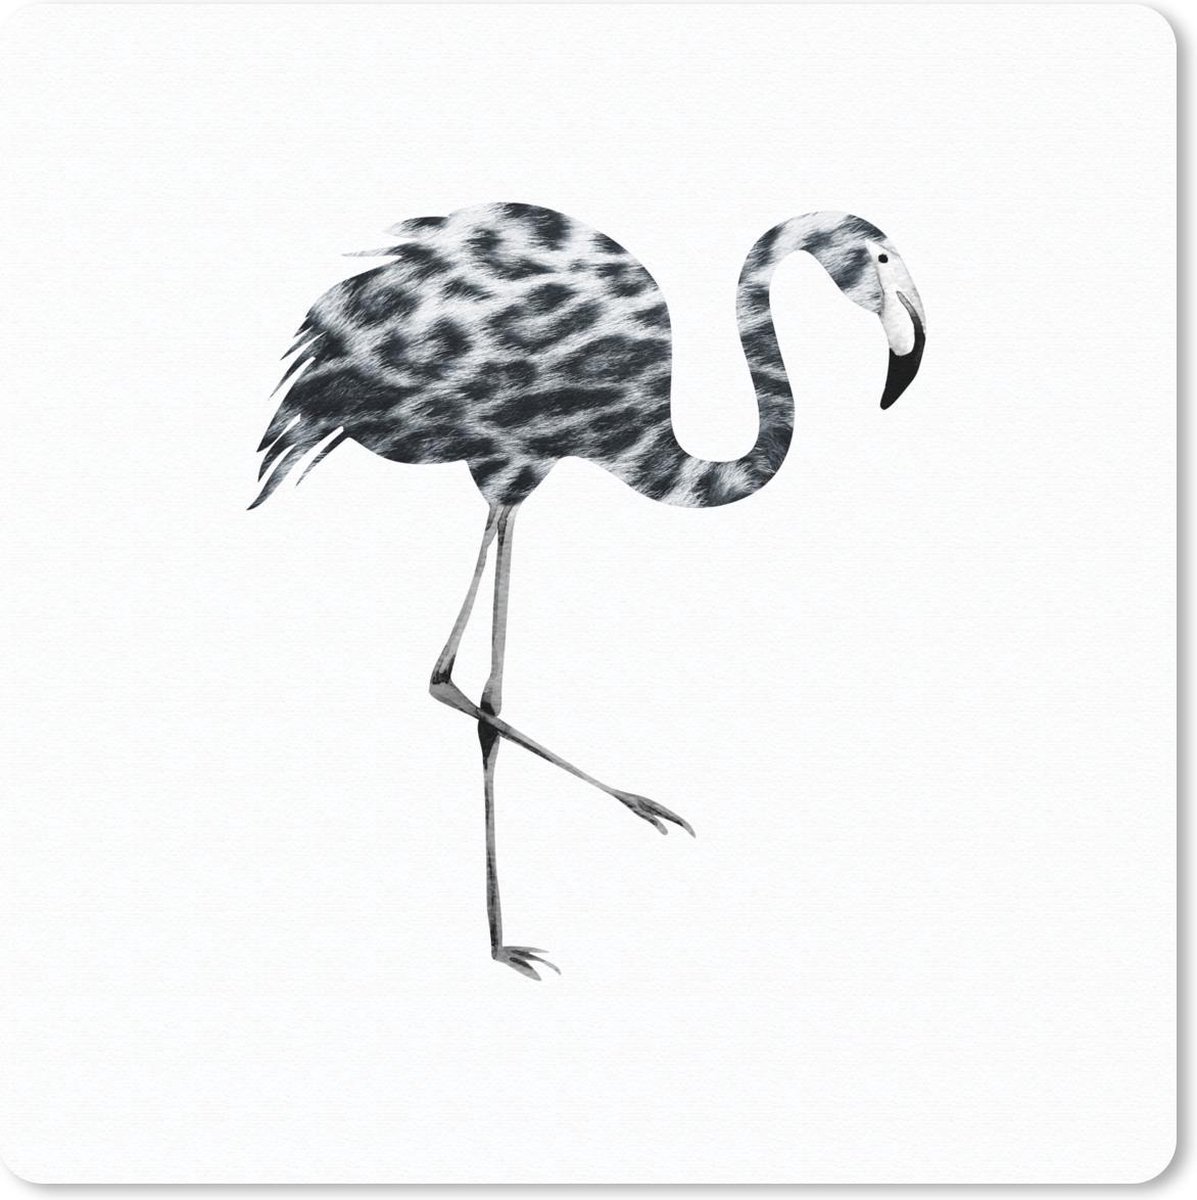 Muismat - Mousepad - Flamingo - Vogel - Panterprint - Tekening - 30x30 cm - Muismatten